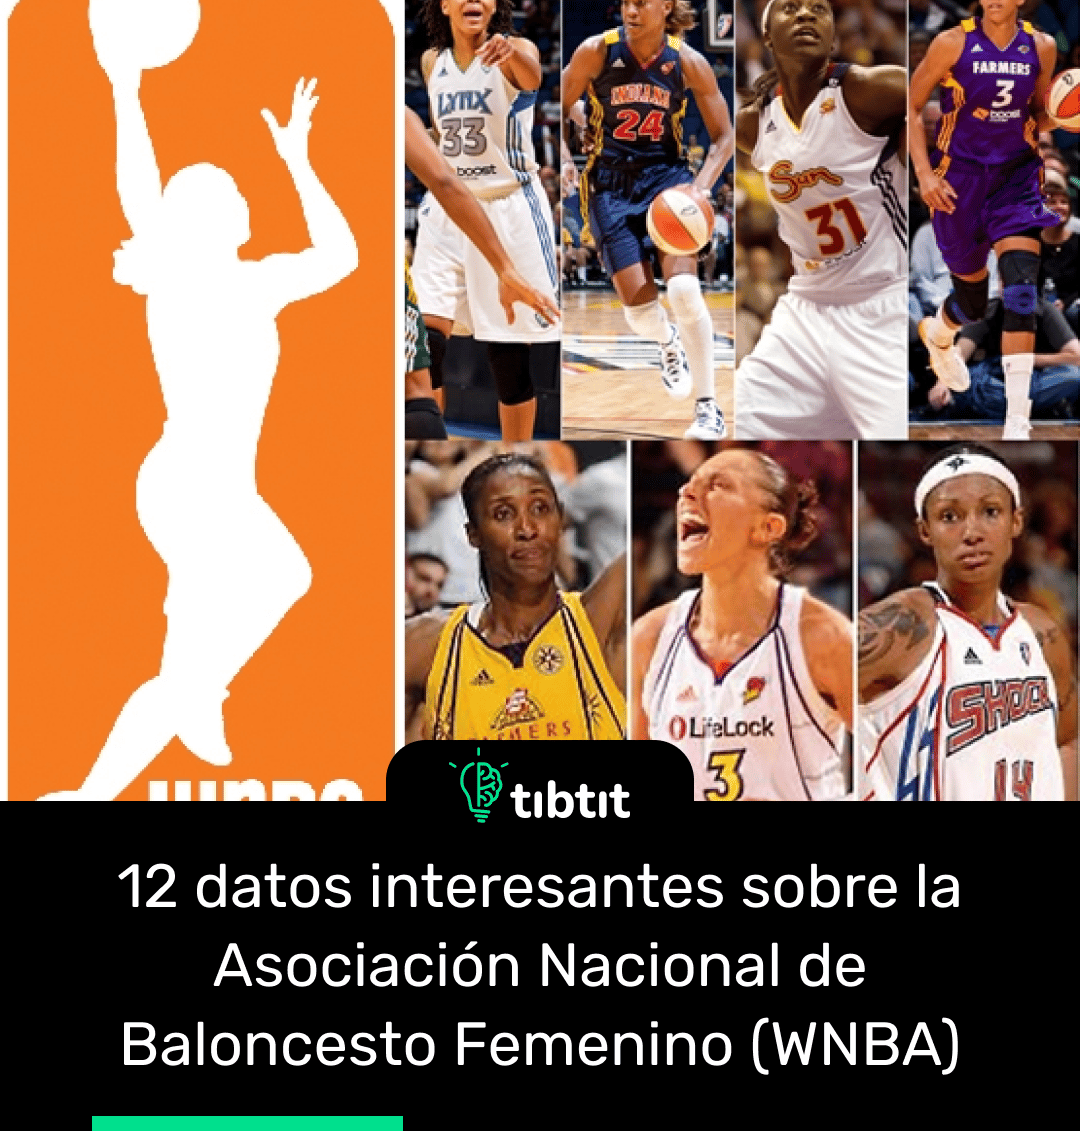 12 datos interesantes sobre la Asociación Nacional de Baloncesto Femenino  (WNBA) | Curiosidades & Datos curiosos | Los datos y curiosidades más  divertidos del mundo 